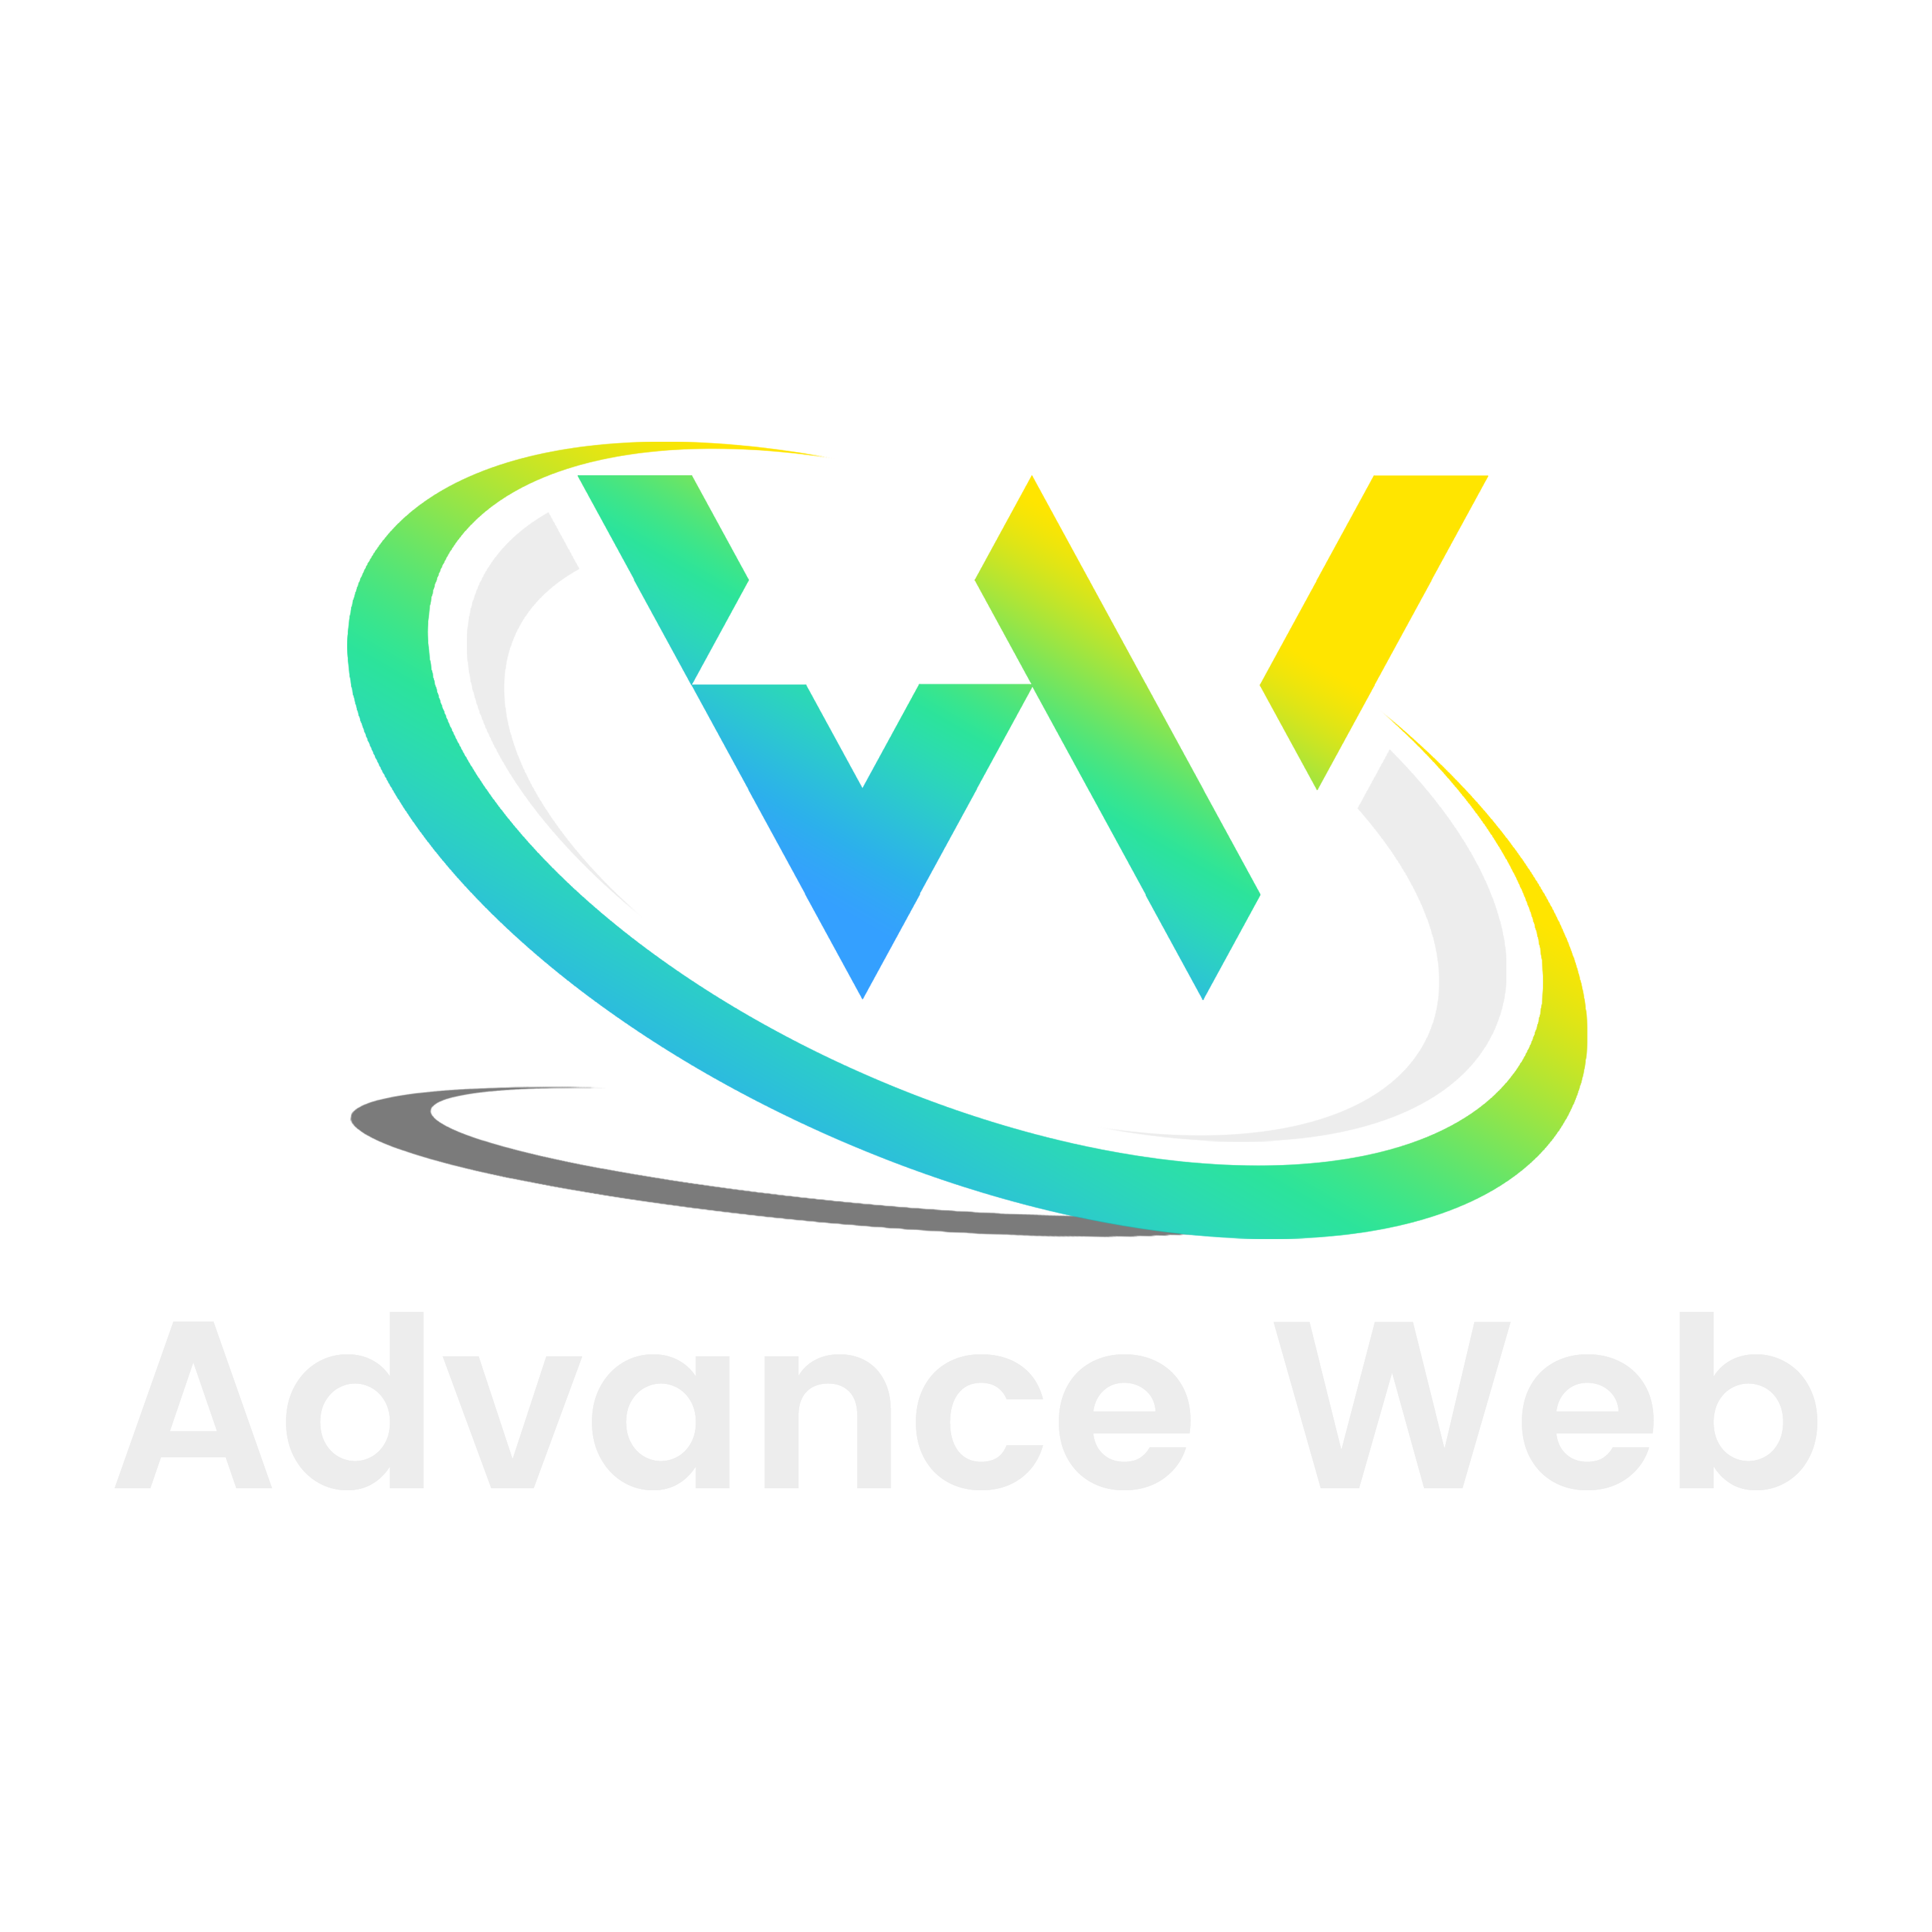 Advanced Web Logo Design Template PNG Transparent